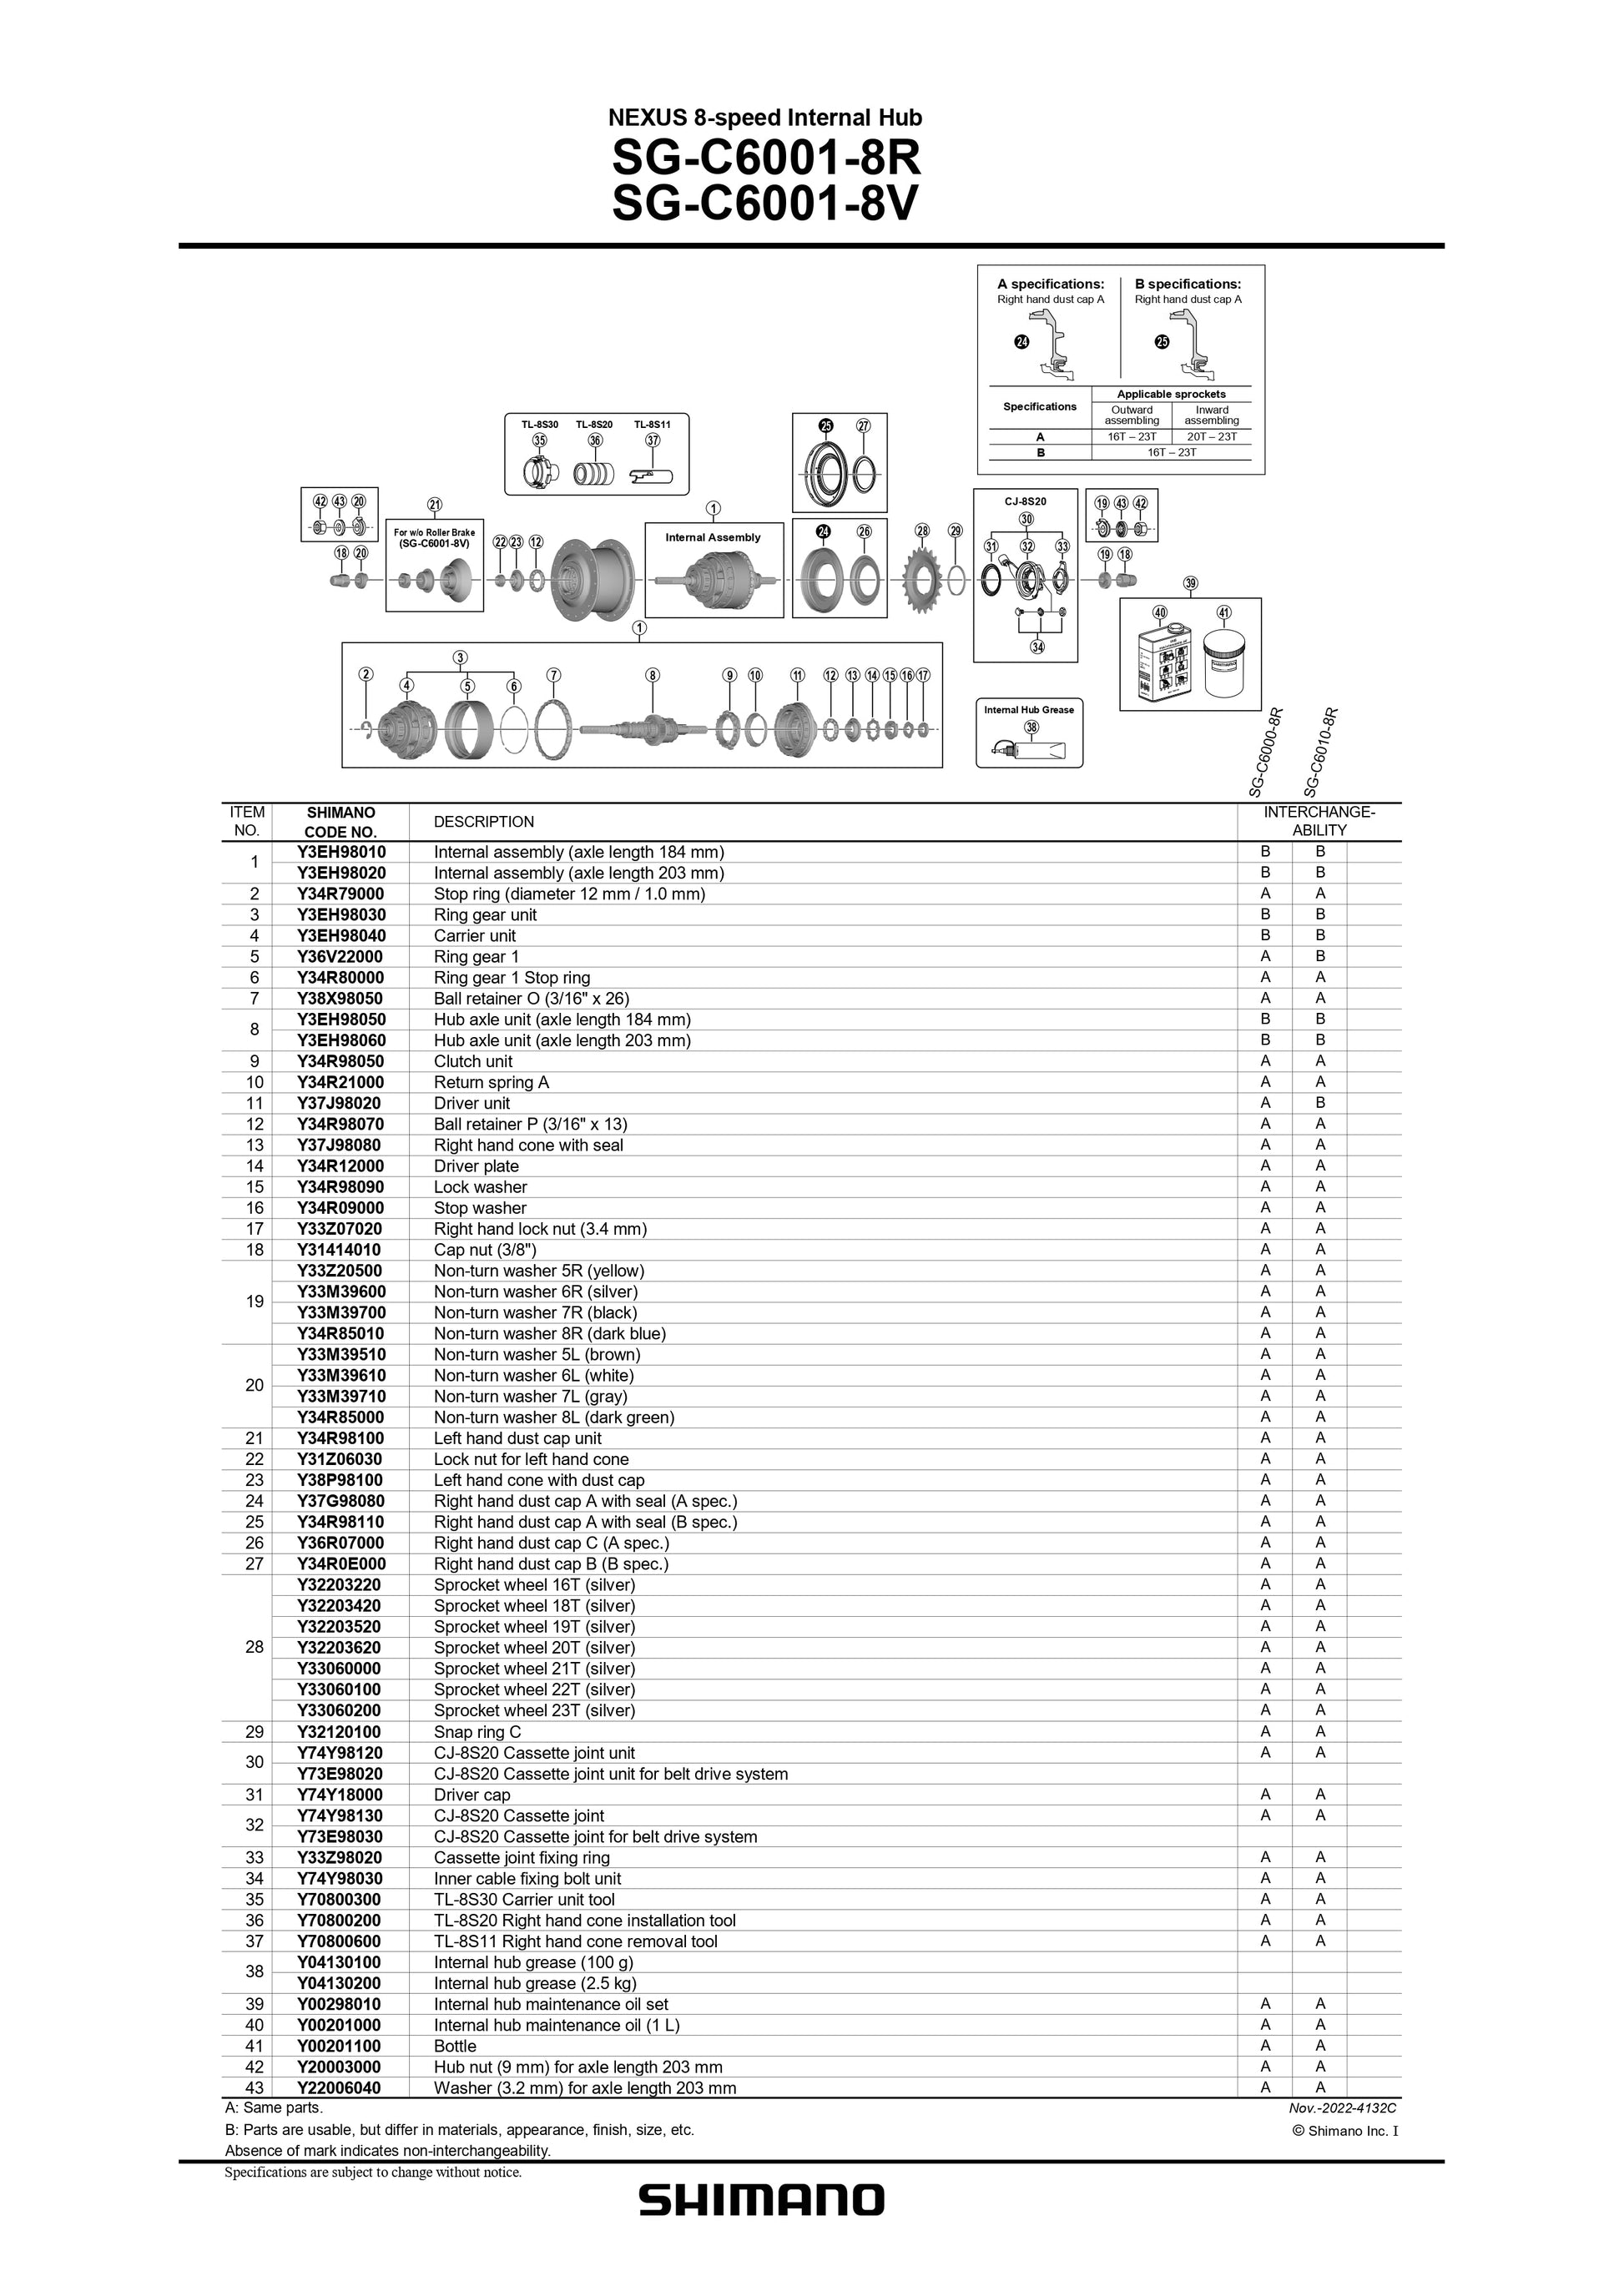 SHIMANO Nexus SG-C6001 Cassette Joint Unit for Belt Drive System - Y73E98020-Pit Crew Cycles